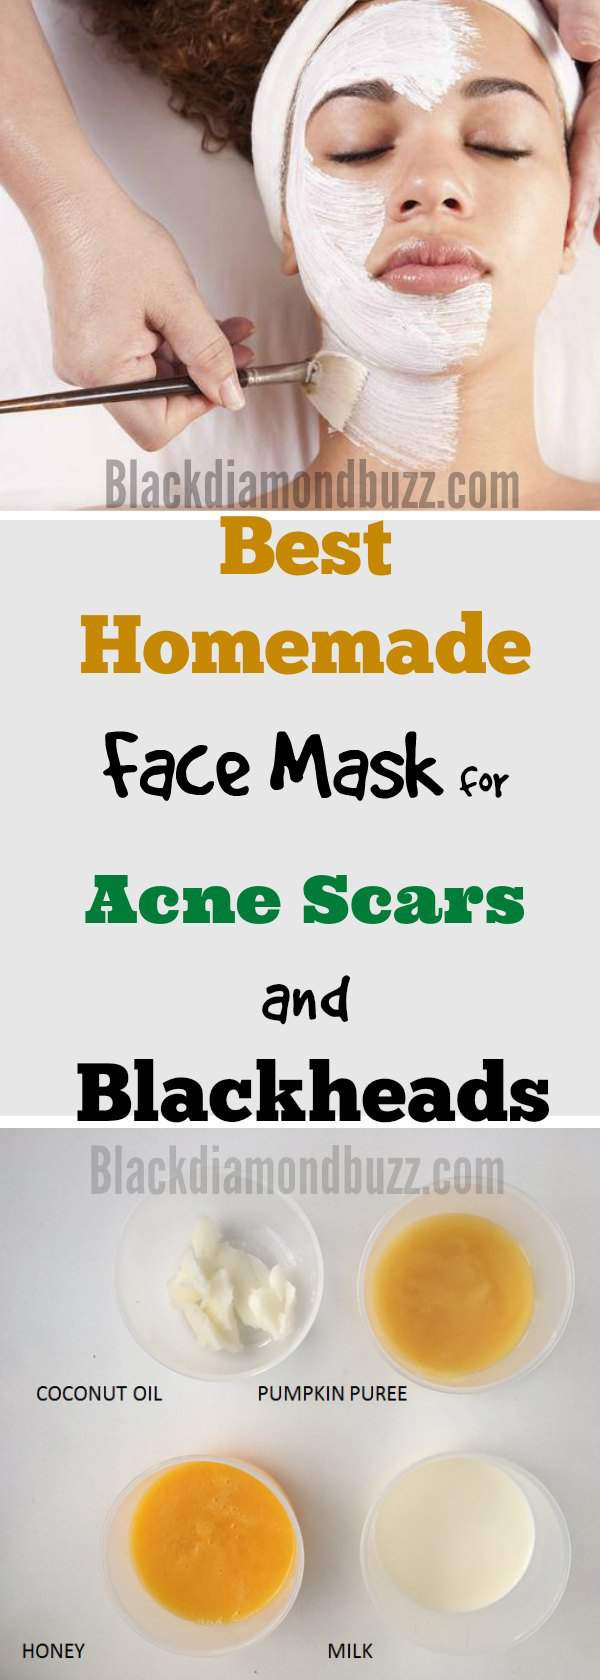 DIY Homemade Face Mask
 DIY Face Mask for Acne 7 Best Homemade Face Masks